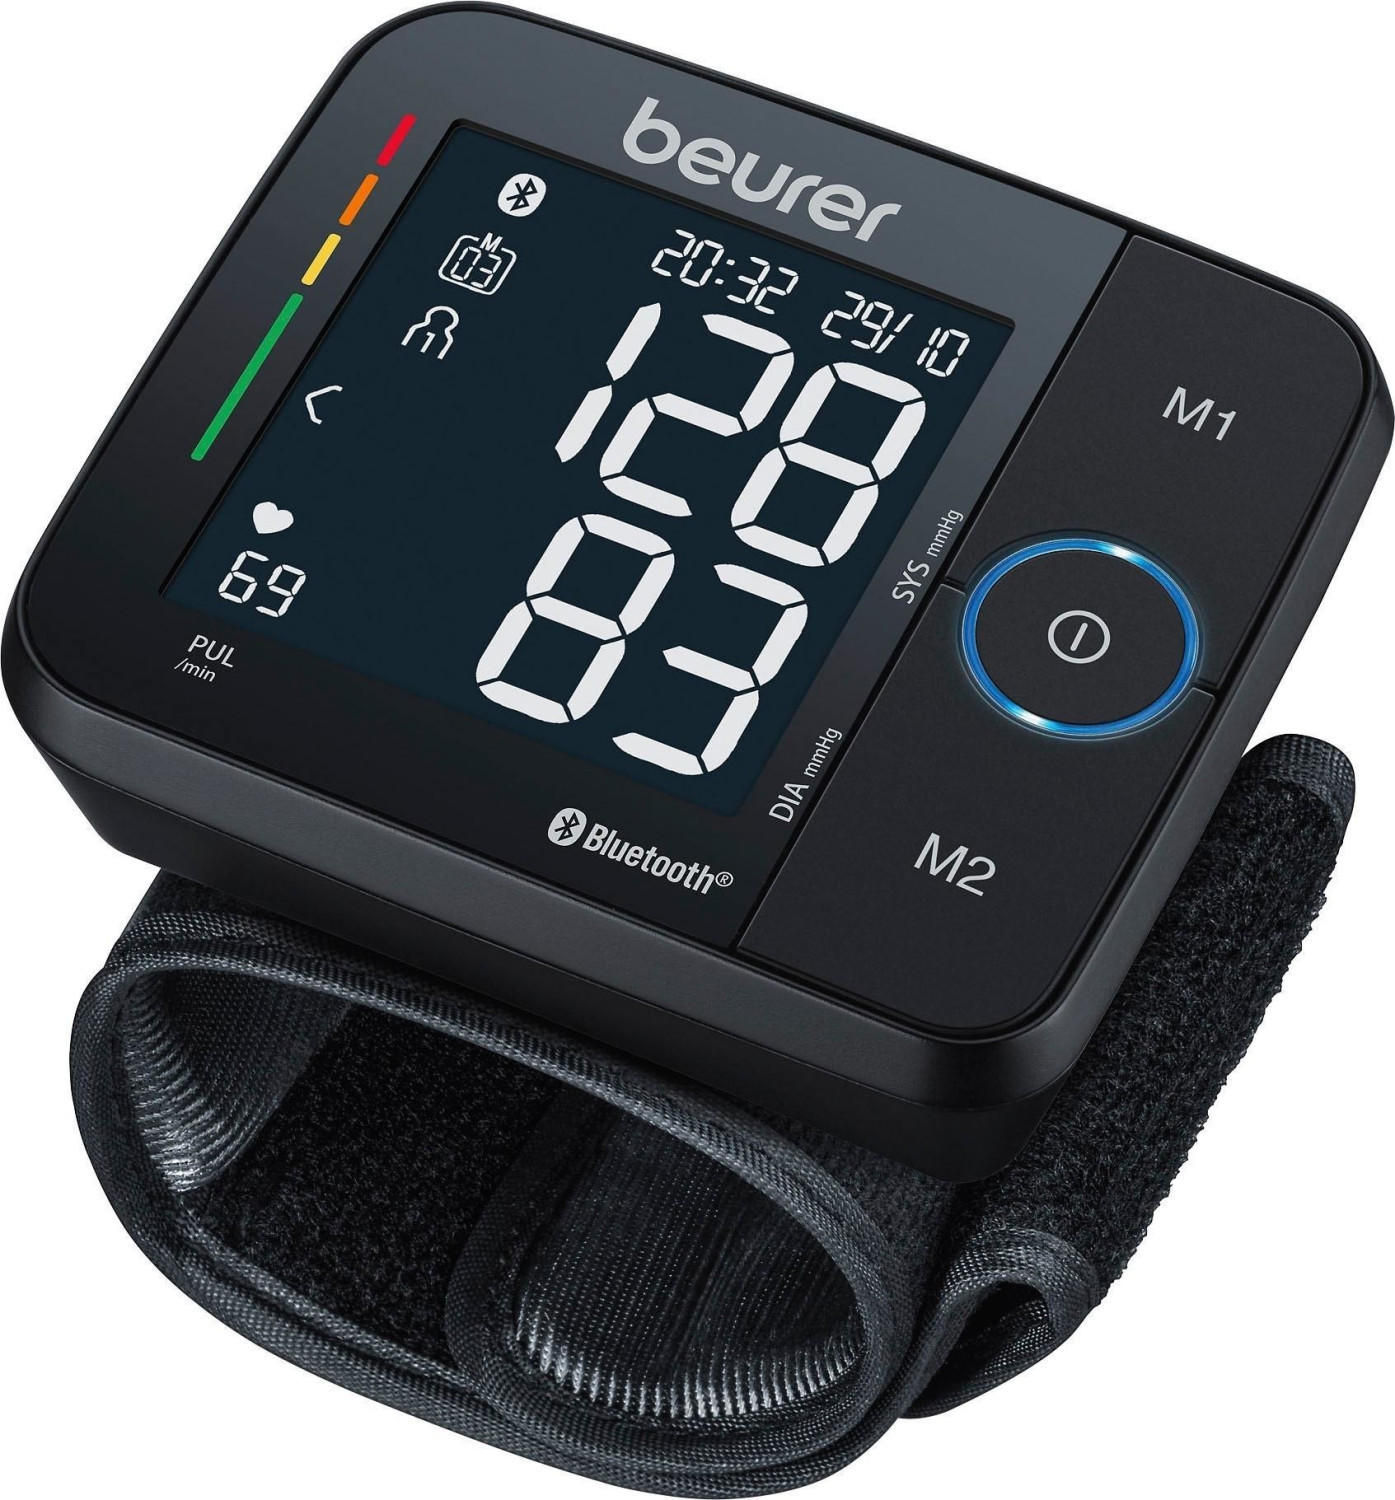 Beurer BC 54 Blutooth Test Testbericht.de-Note: 4,0 vom (April 2023)